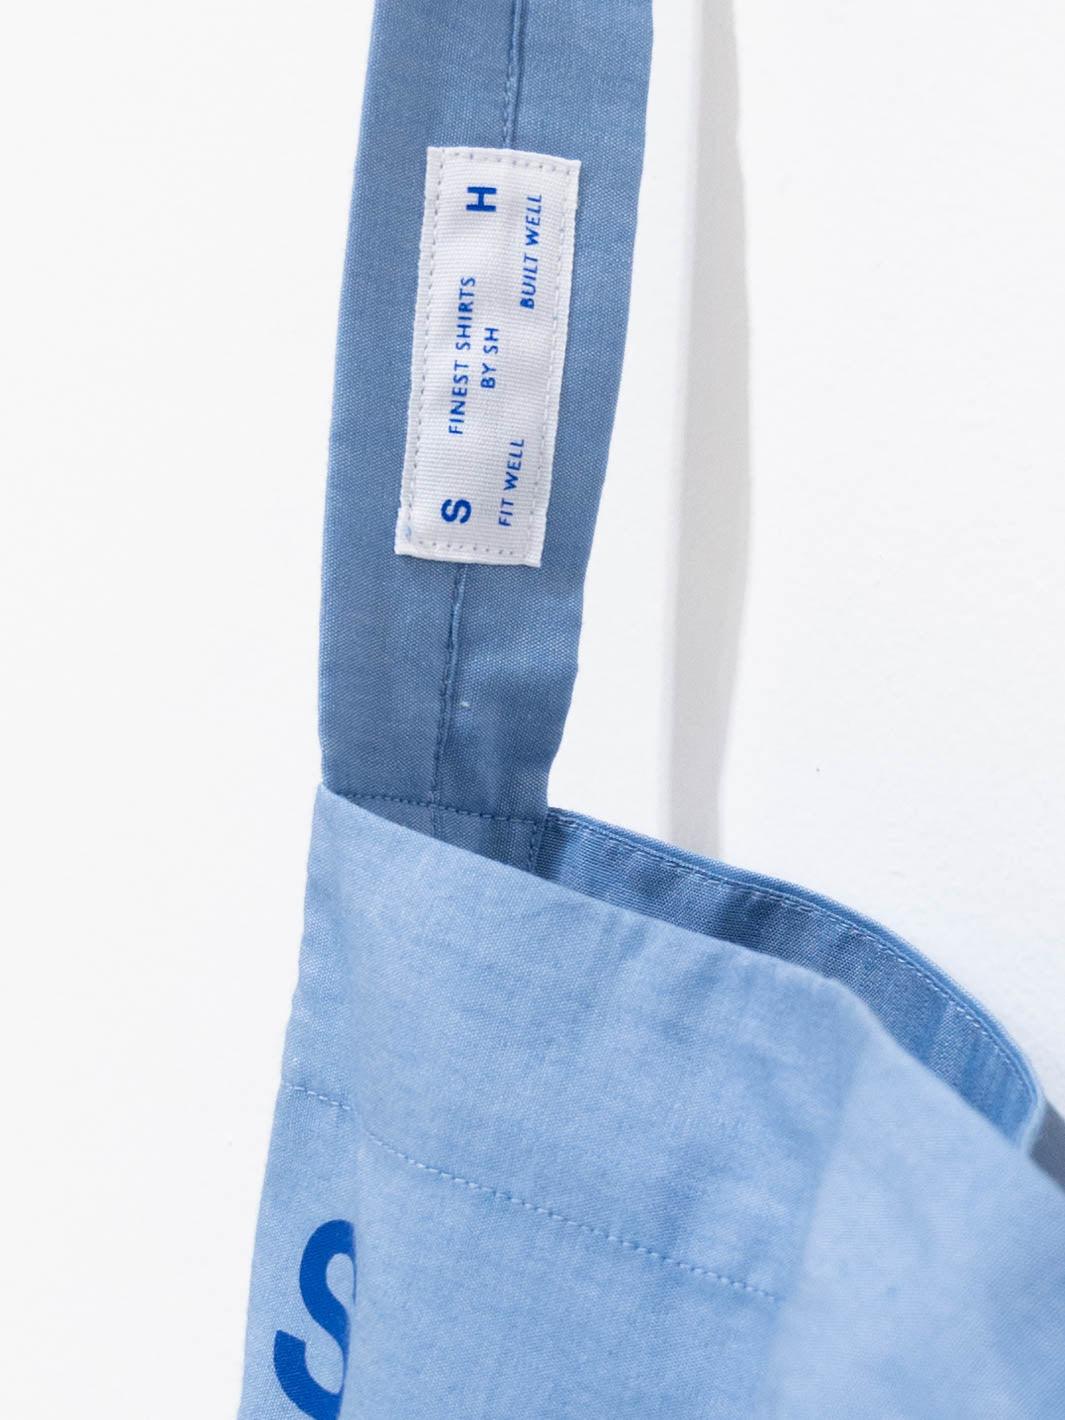 Namu Shop - S H ERA for S H Tote Bag - 3 Colors